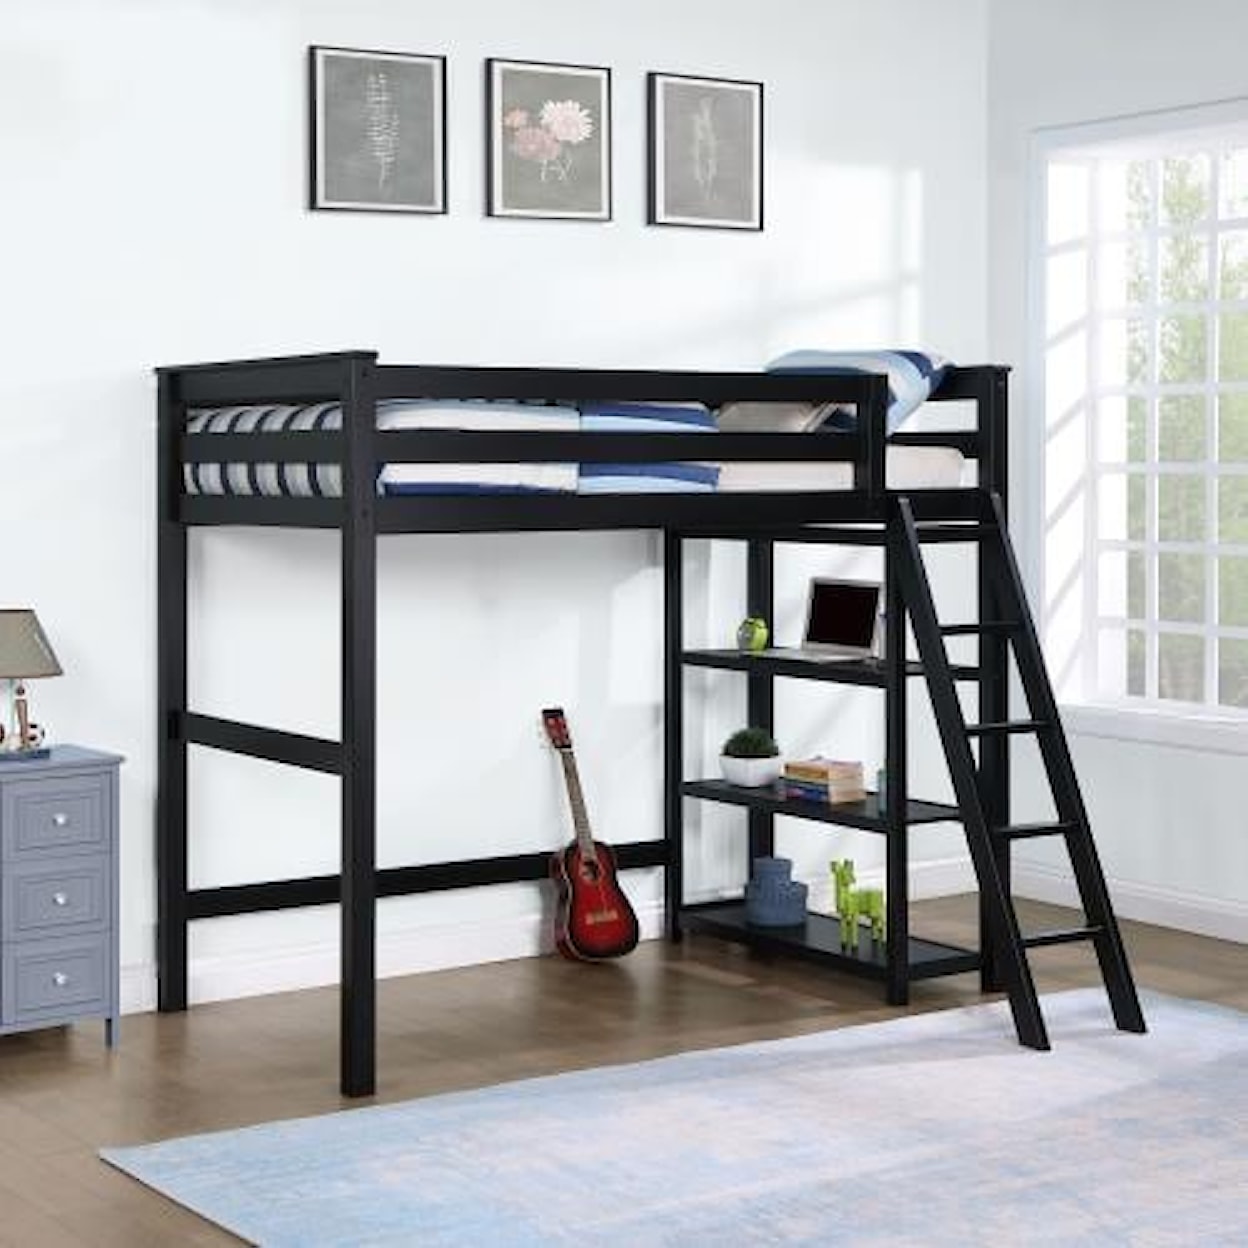 Coaster 46008 3-Shelf Wood Twin Loft Bed Black